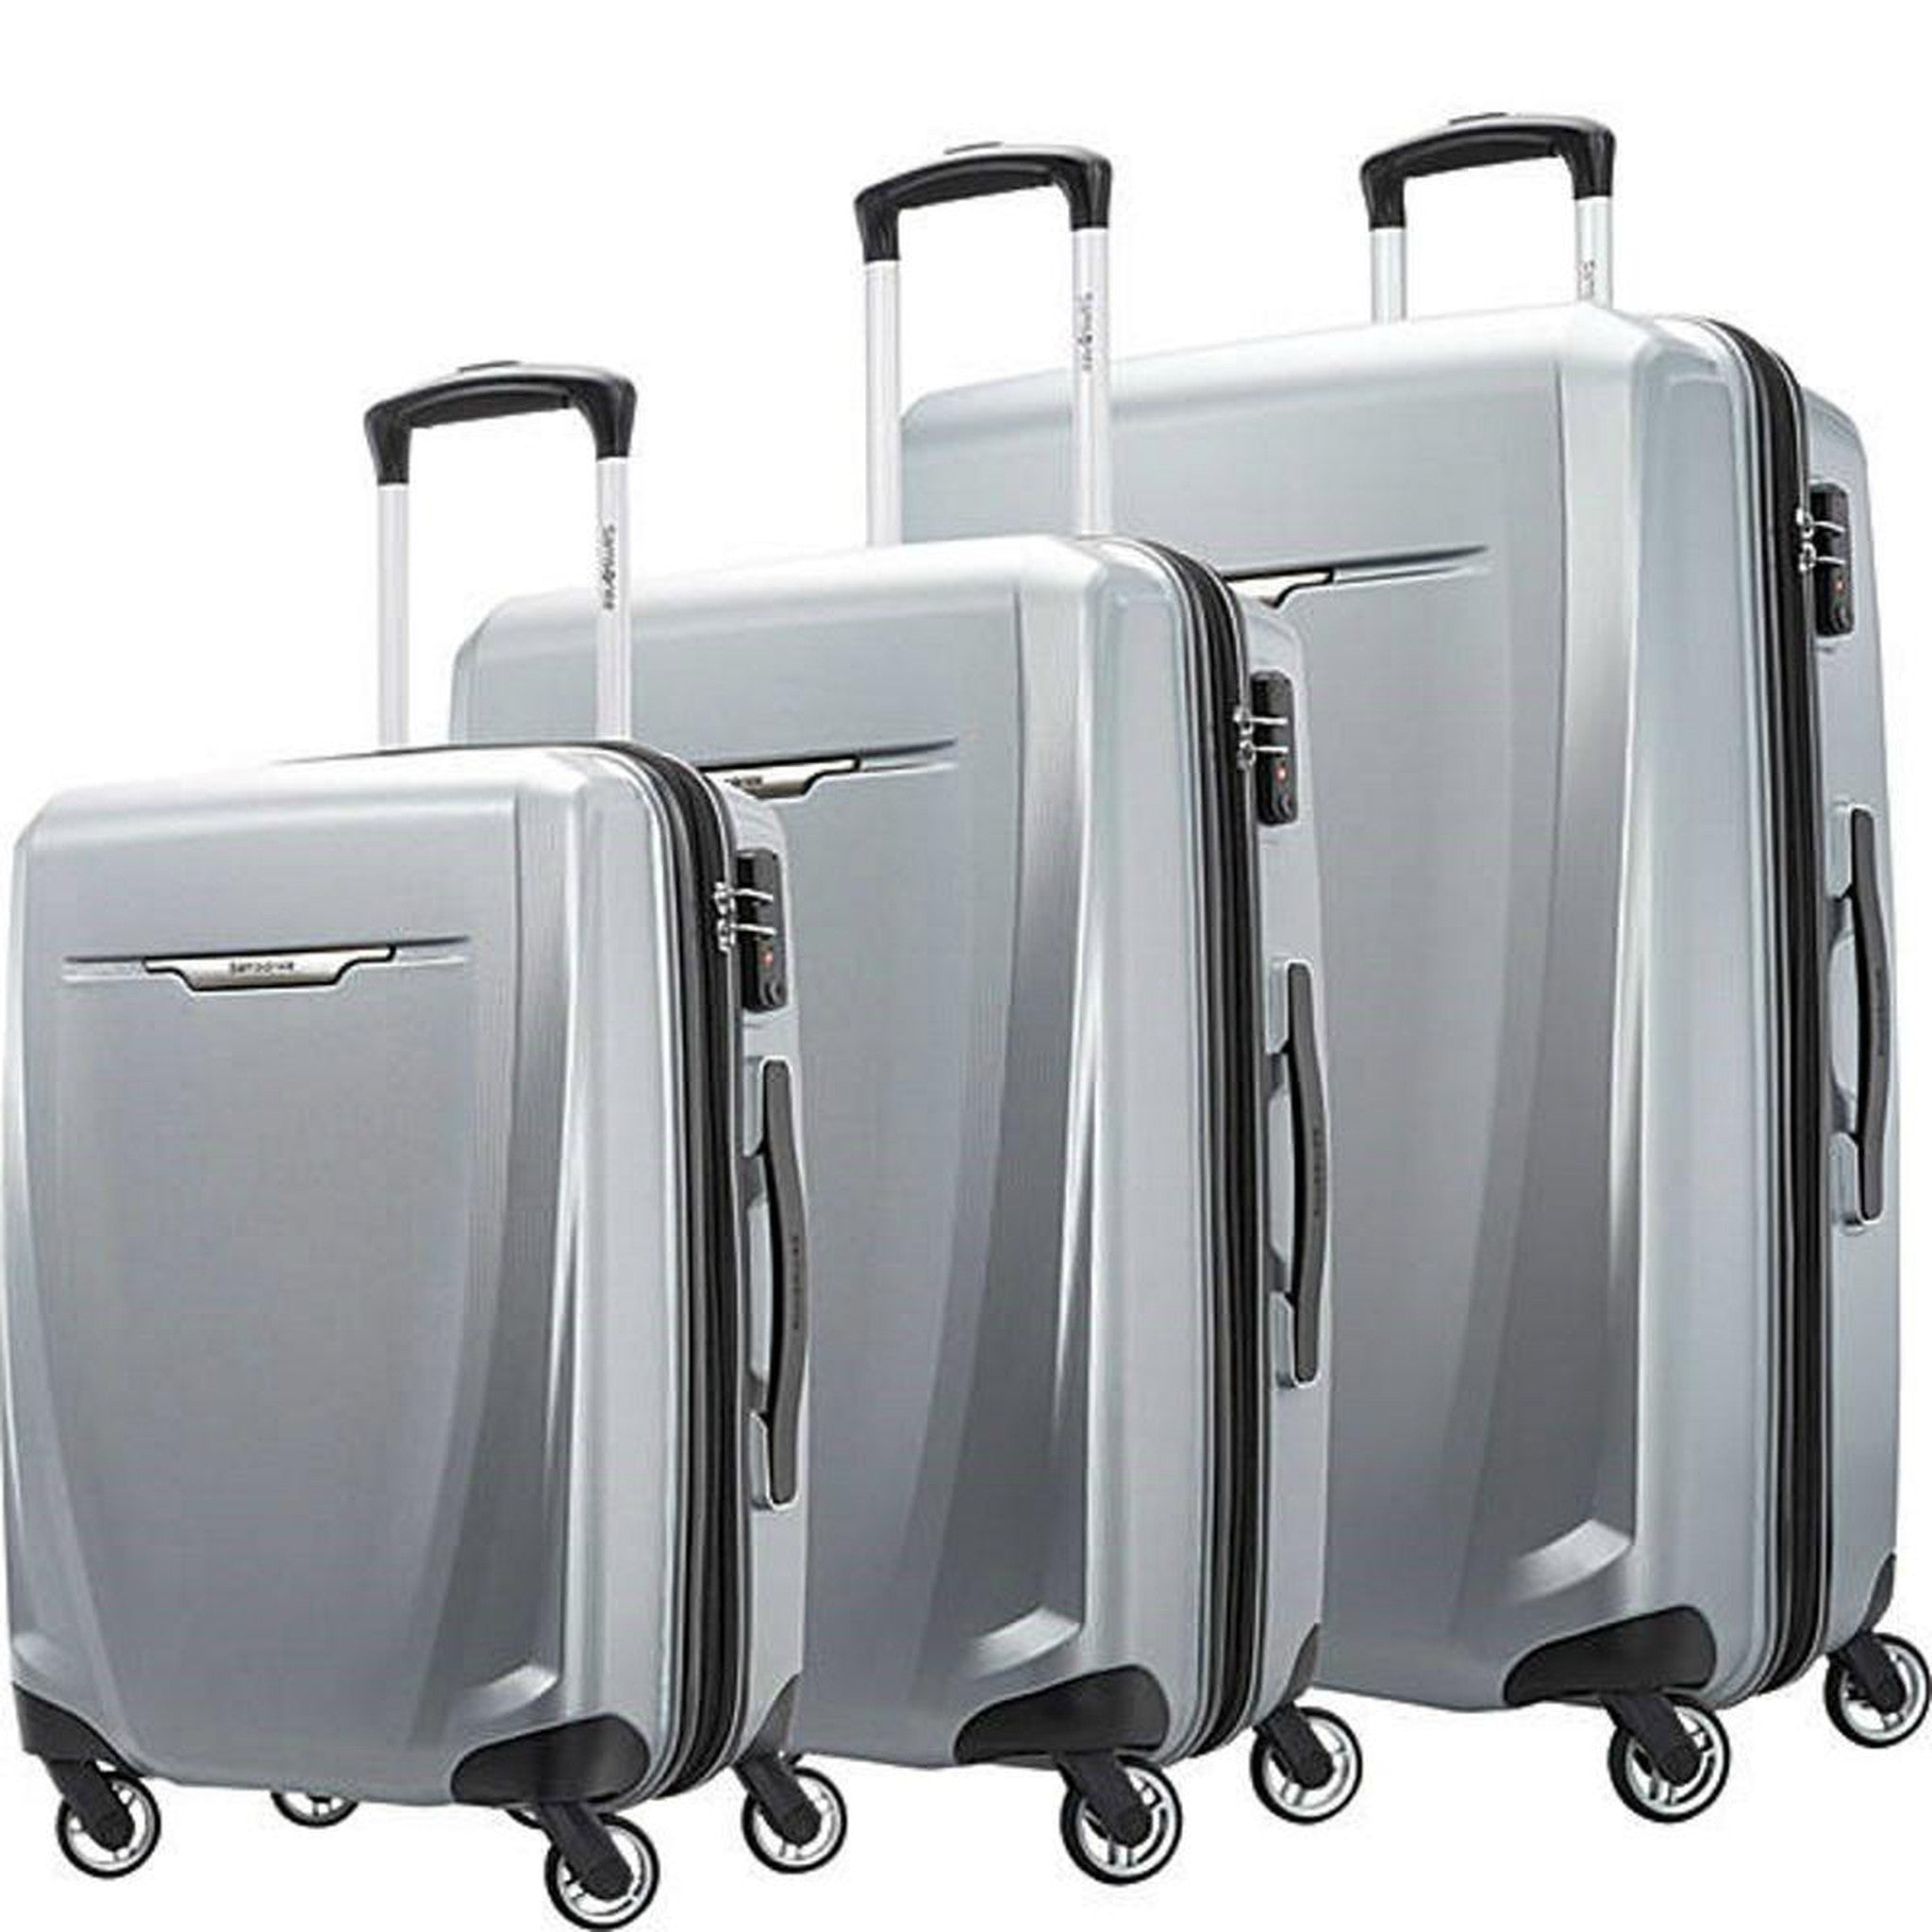 samsonite 3 piece luggage set